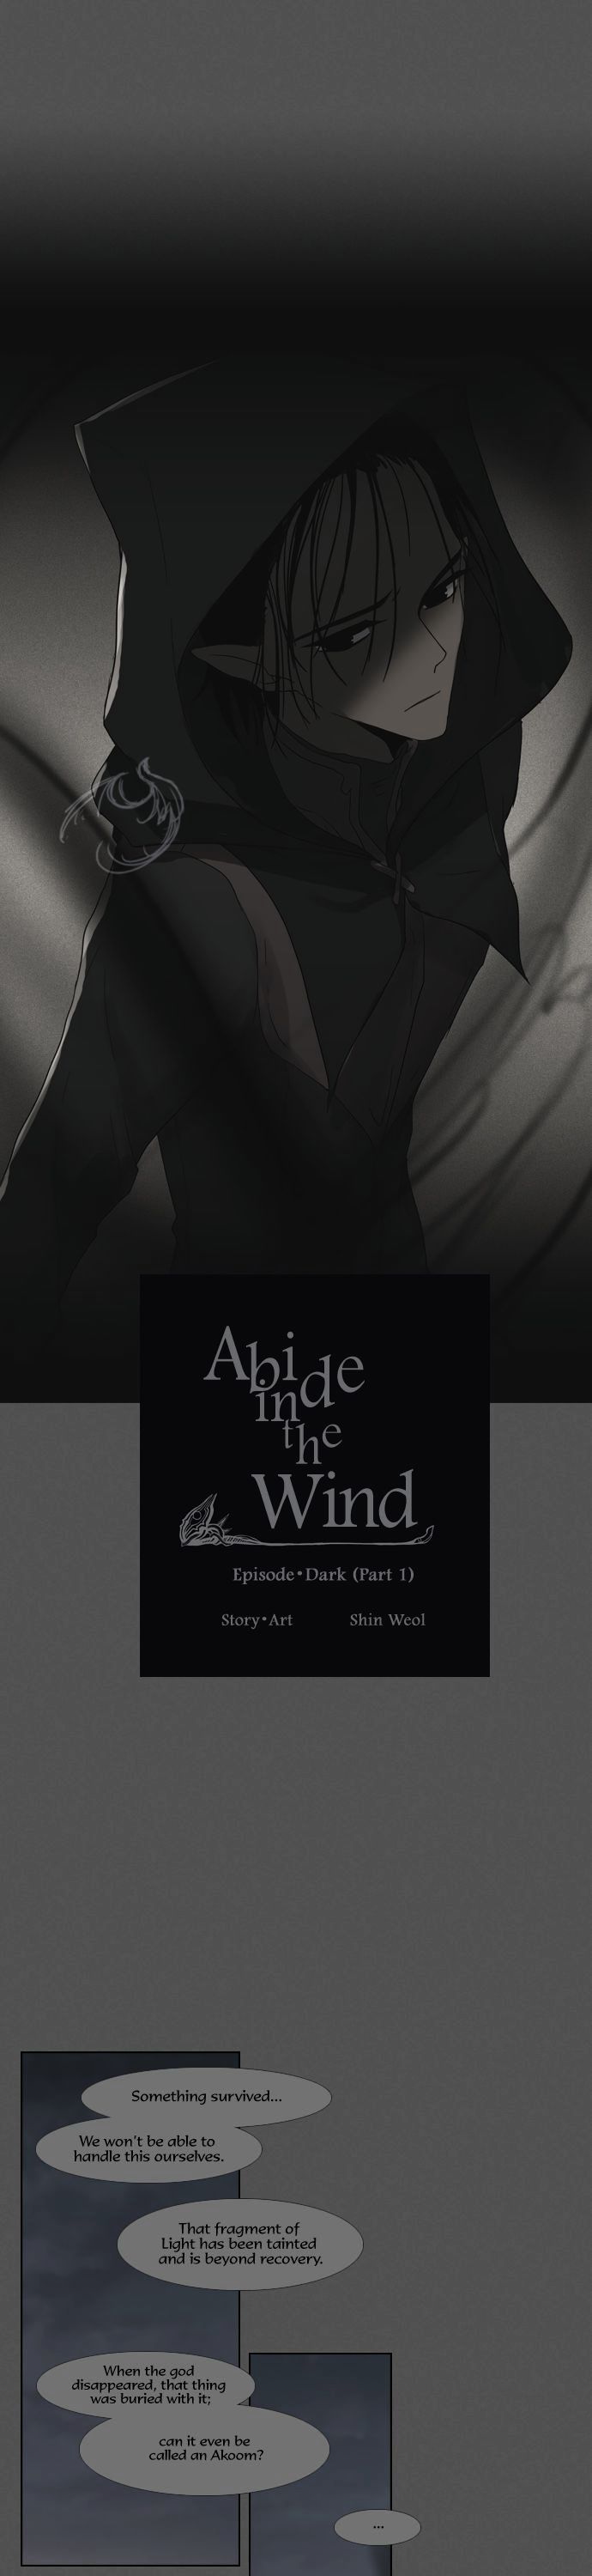 abide_in_the_wind_134_6